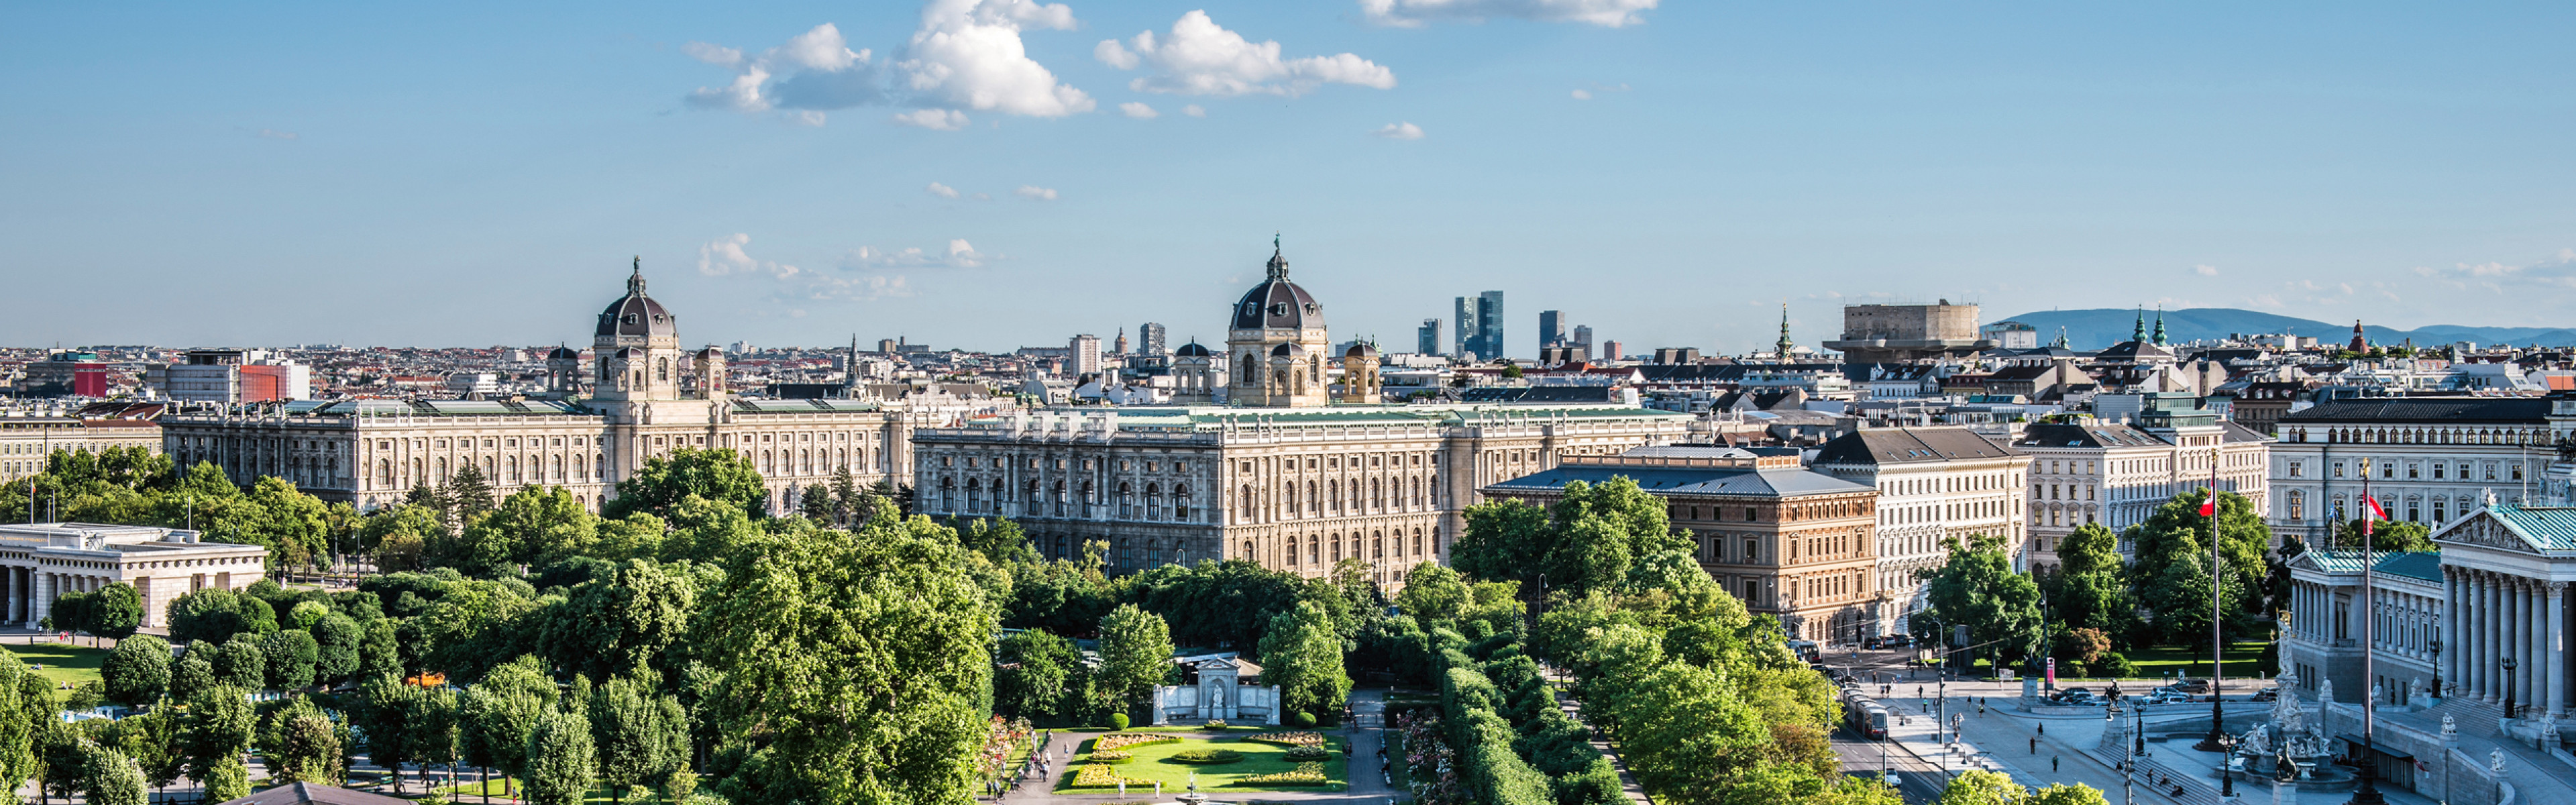 Центр австрии. Австрия панорама Вена панорама. Вена Австрия рассвет. Санкт-Петербург. Столица Франции- Париж, столица Австрии- Вена.